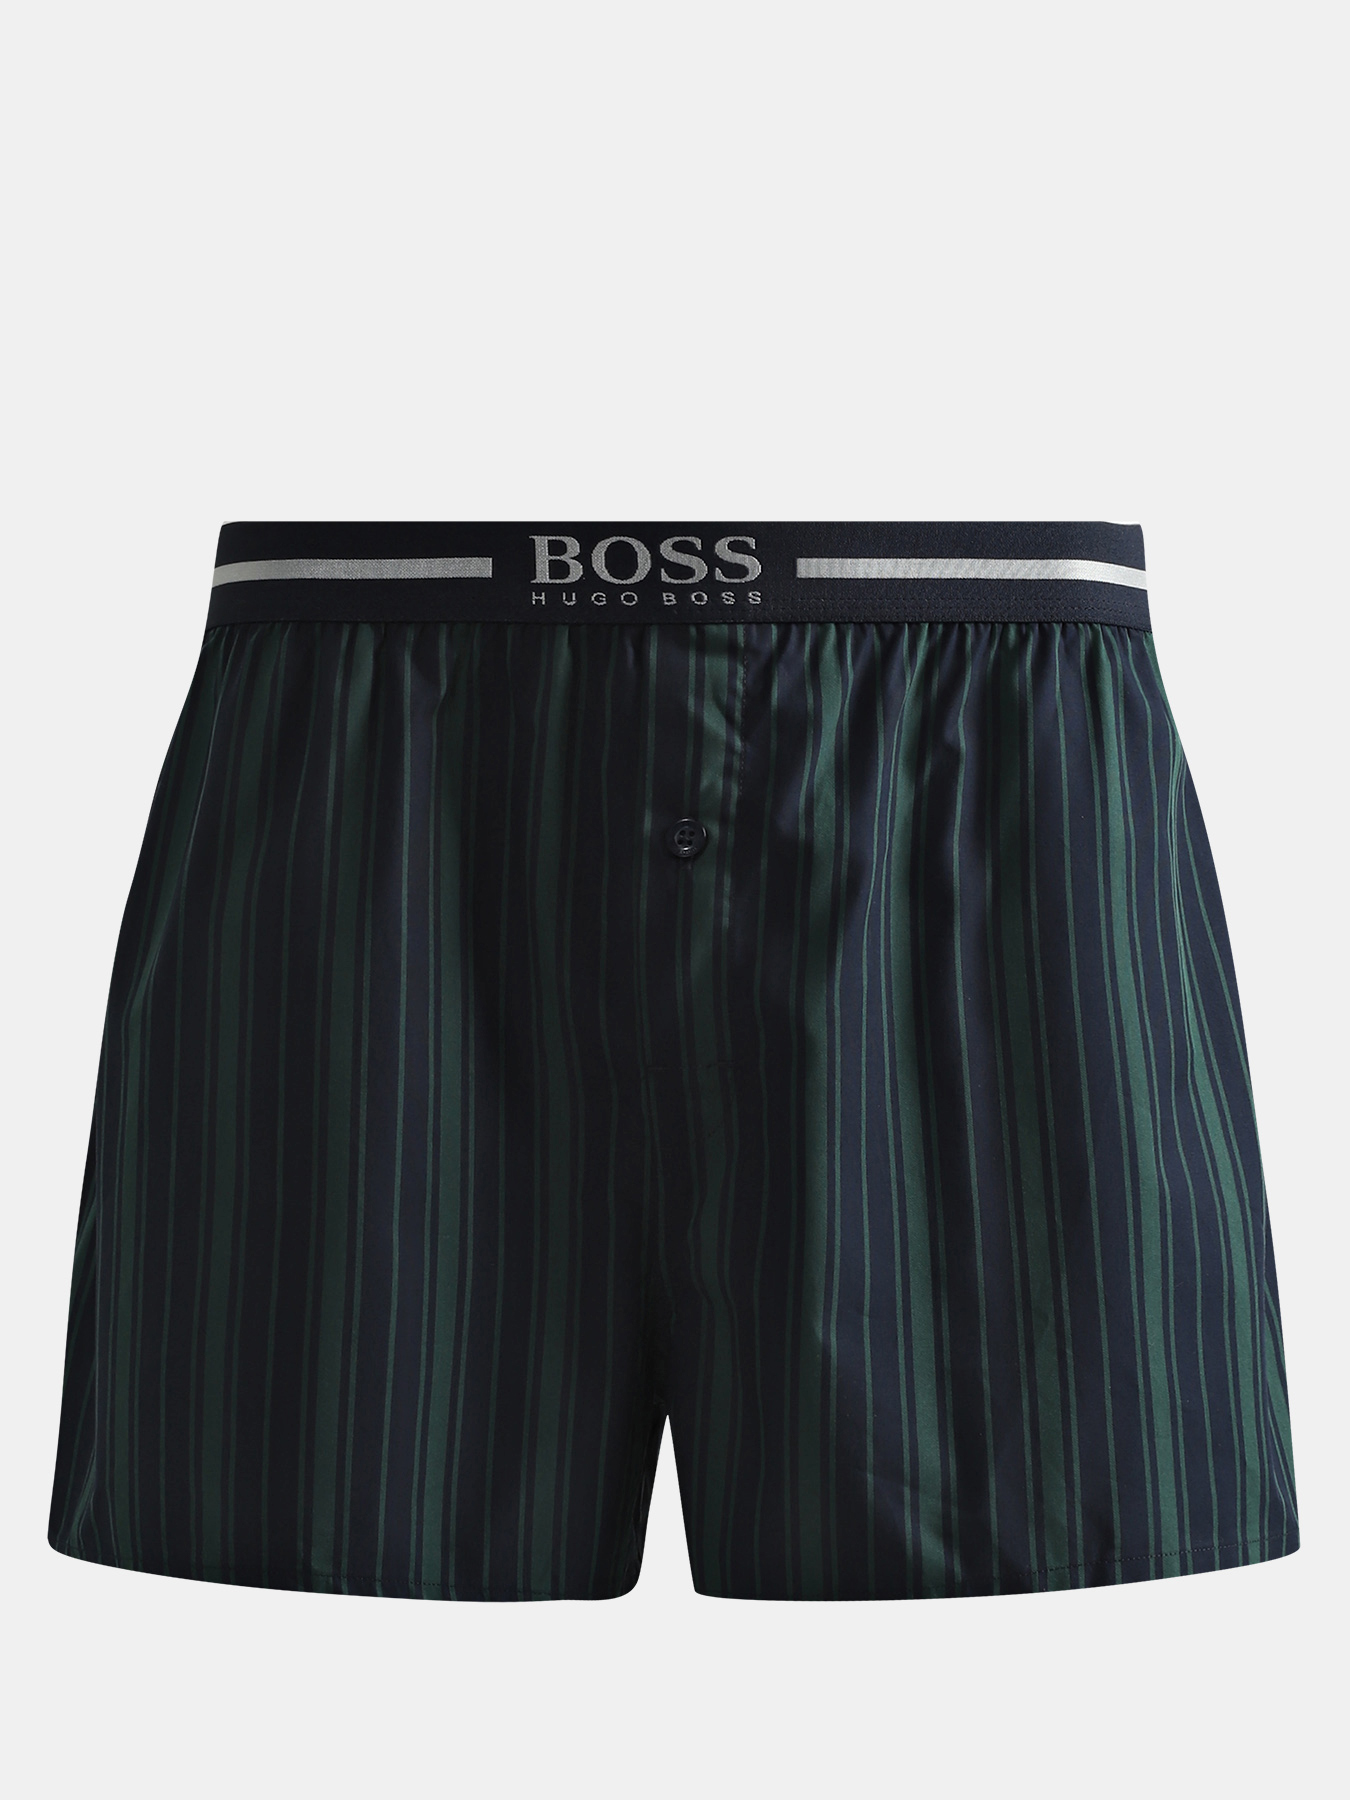 BOSS Трусы Boxer Shorts (2 шт) 359836-045 Фото 2